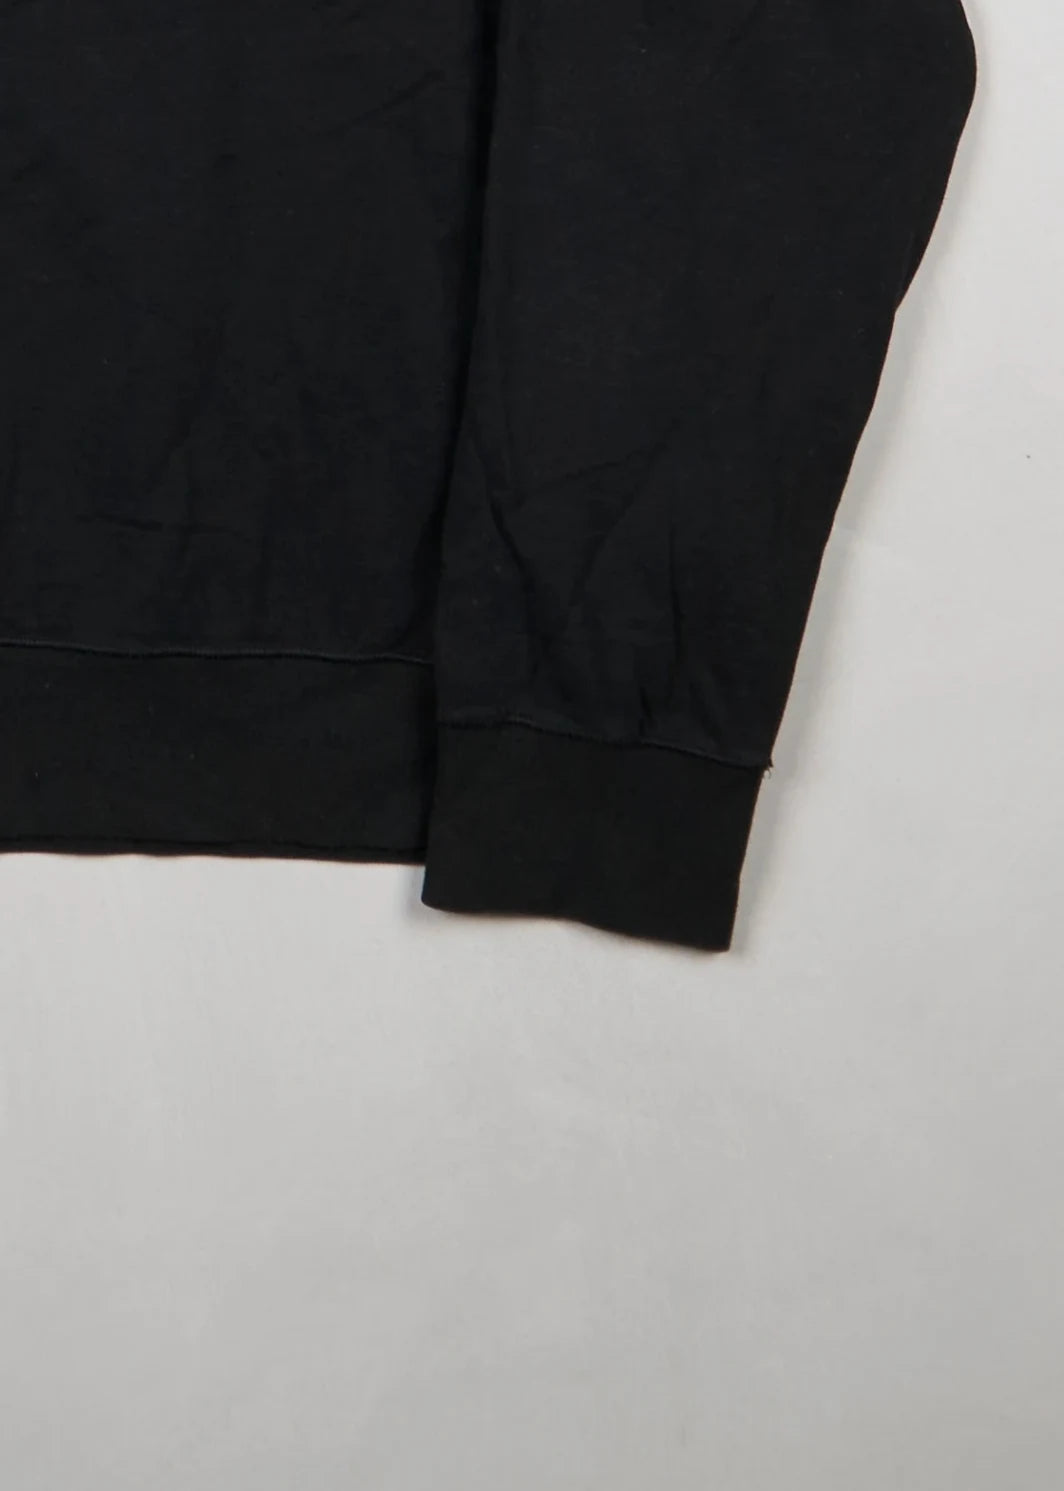 Ralph Lauren - Sweatshirt (M) Bottom Right